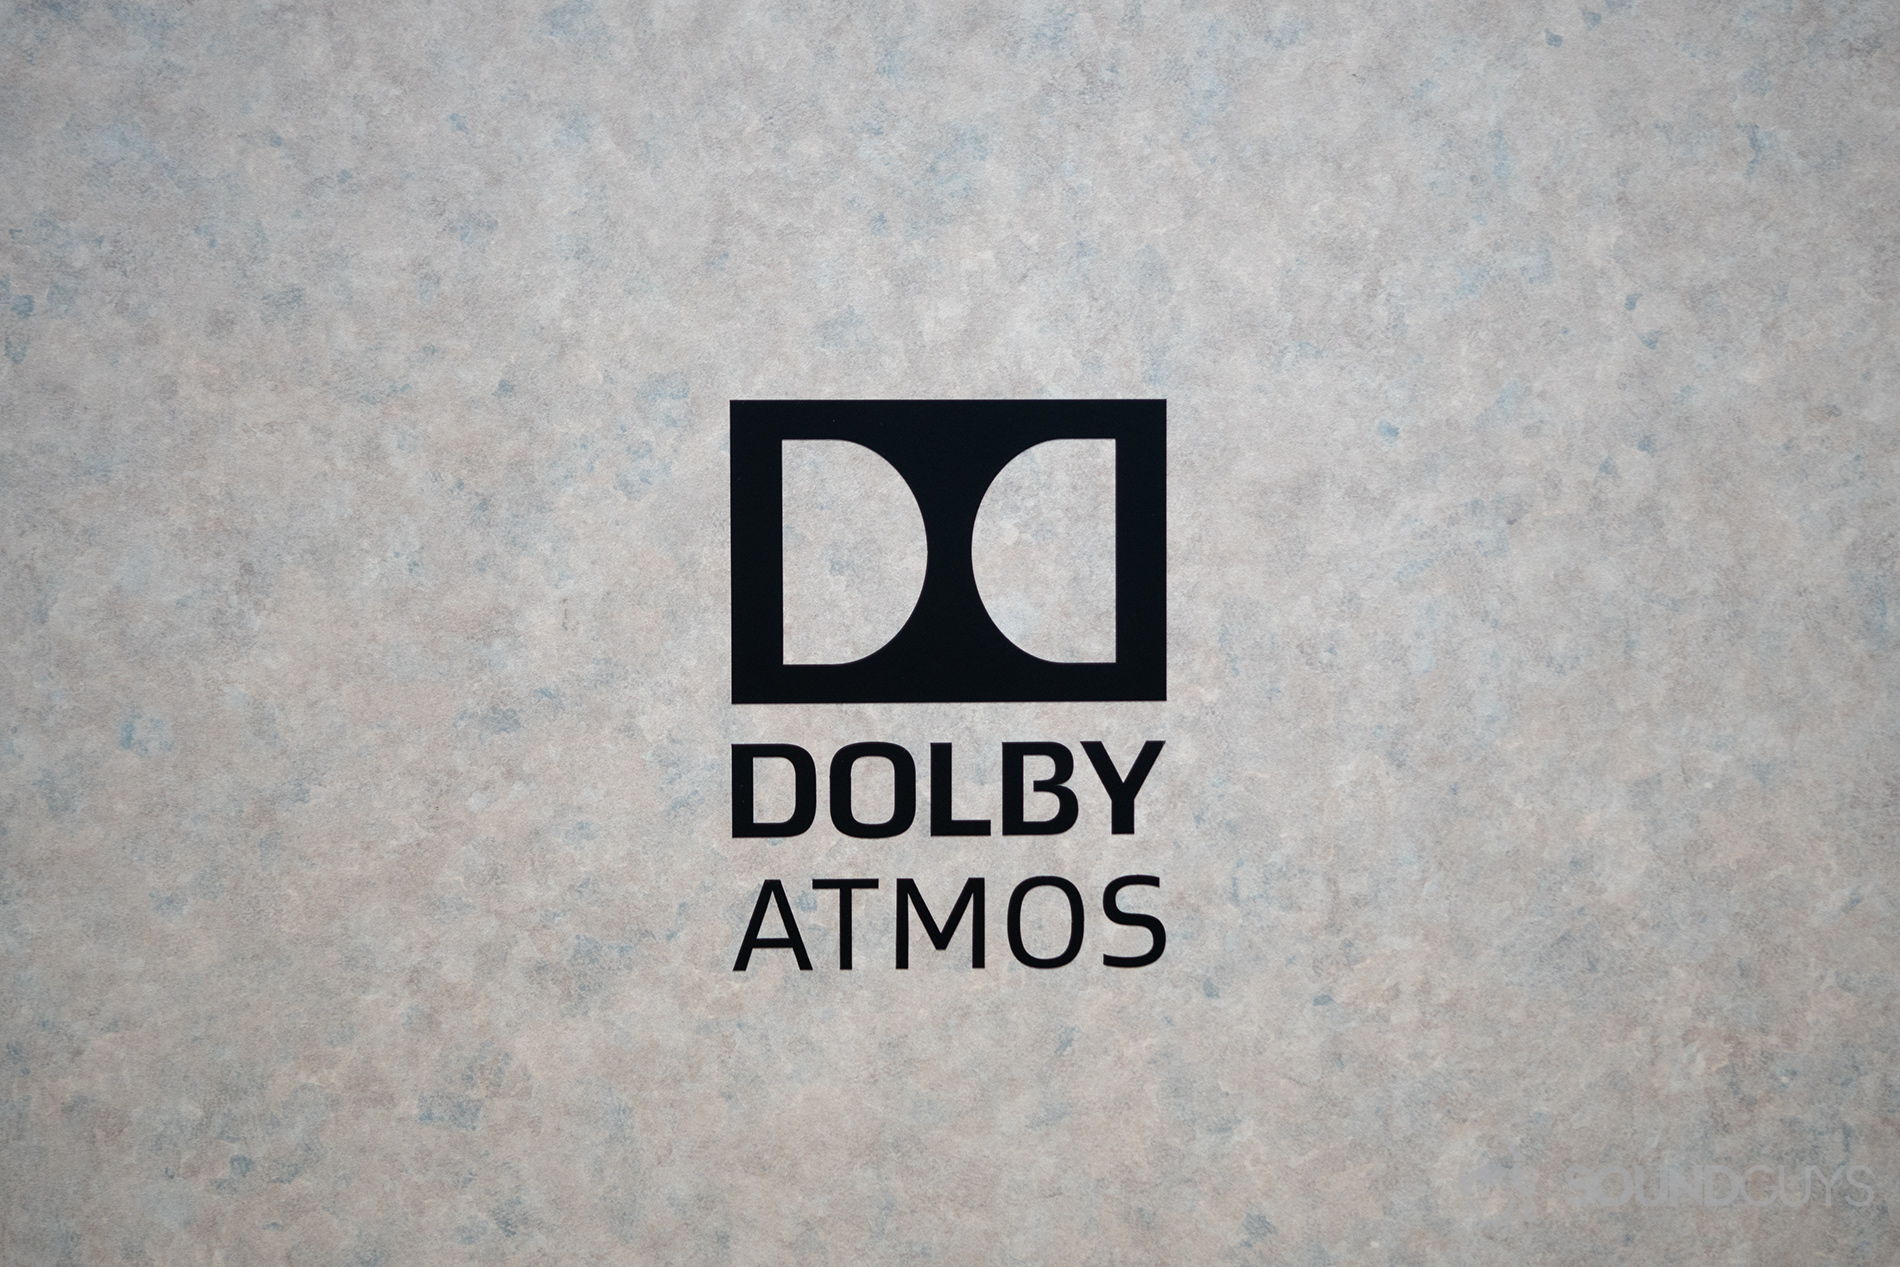 https://www.soundguys.com/wp-content/uploads/2018/06/Dolby-Atmos-logo.jpg